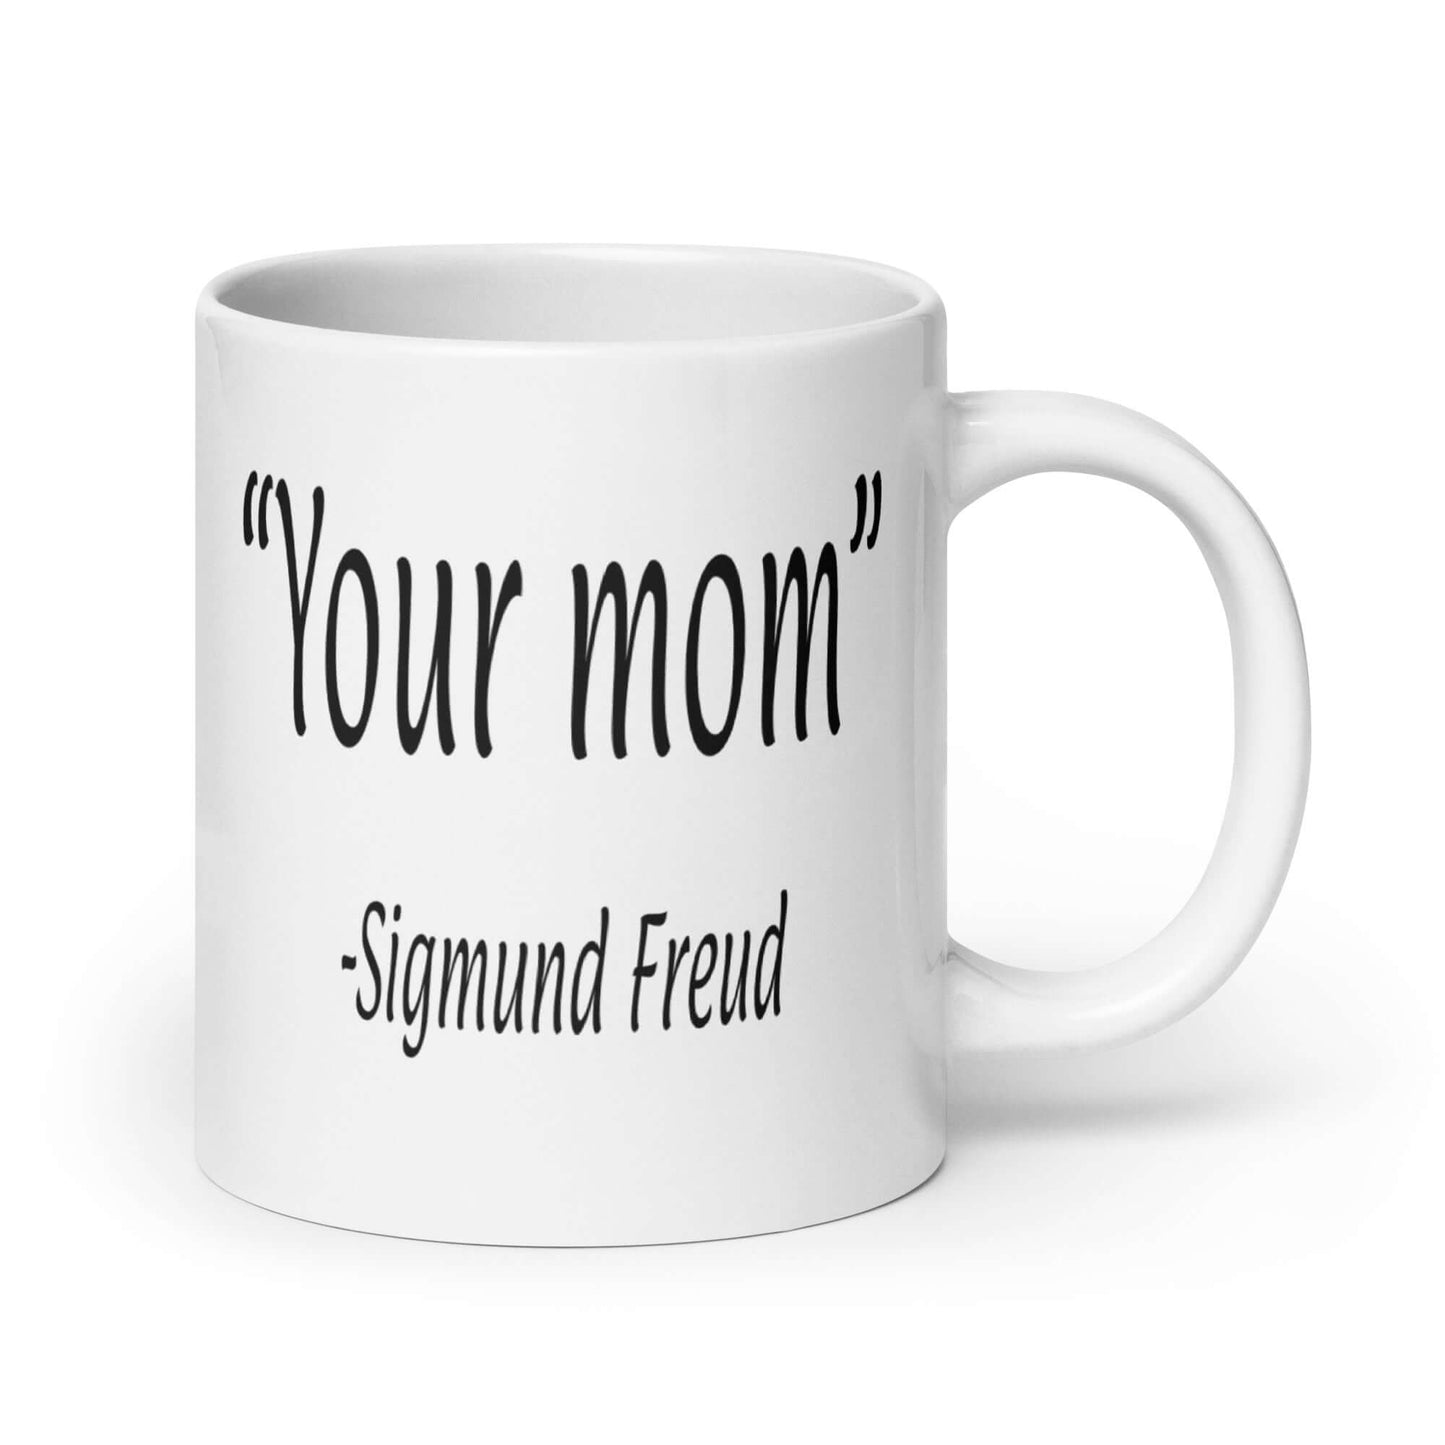 Funny Freud quote sarcastic Mug